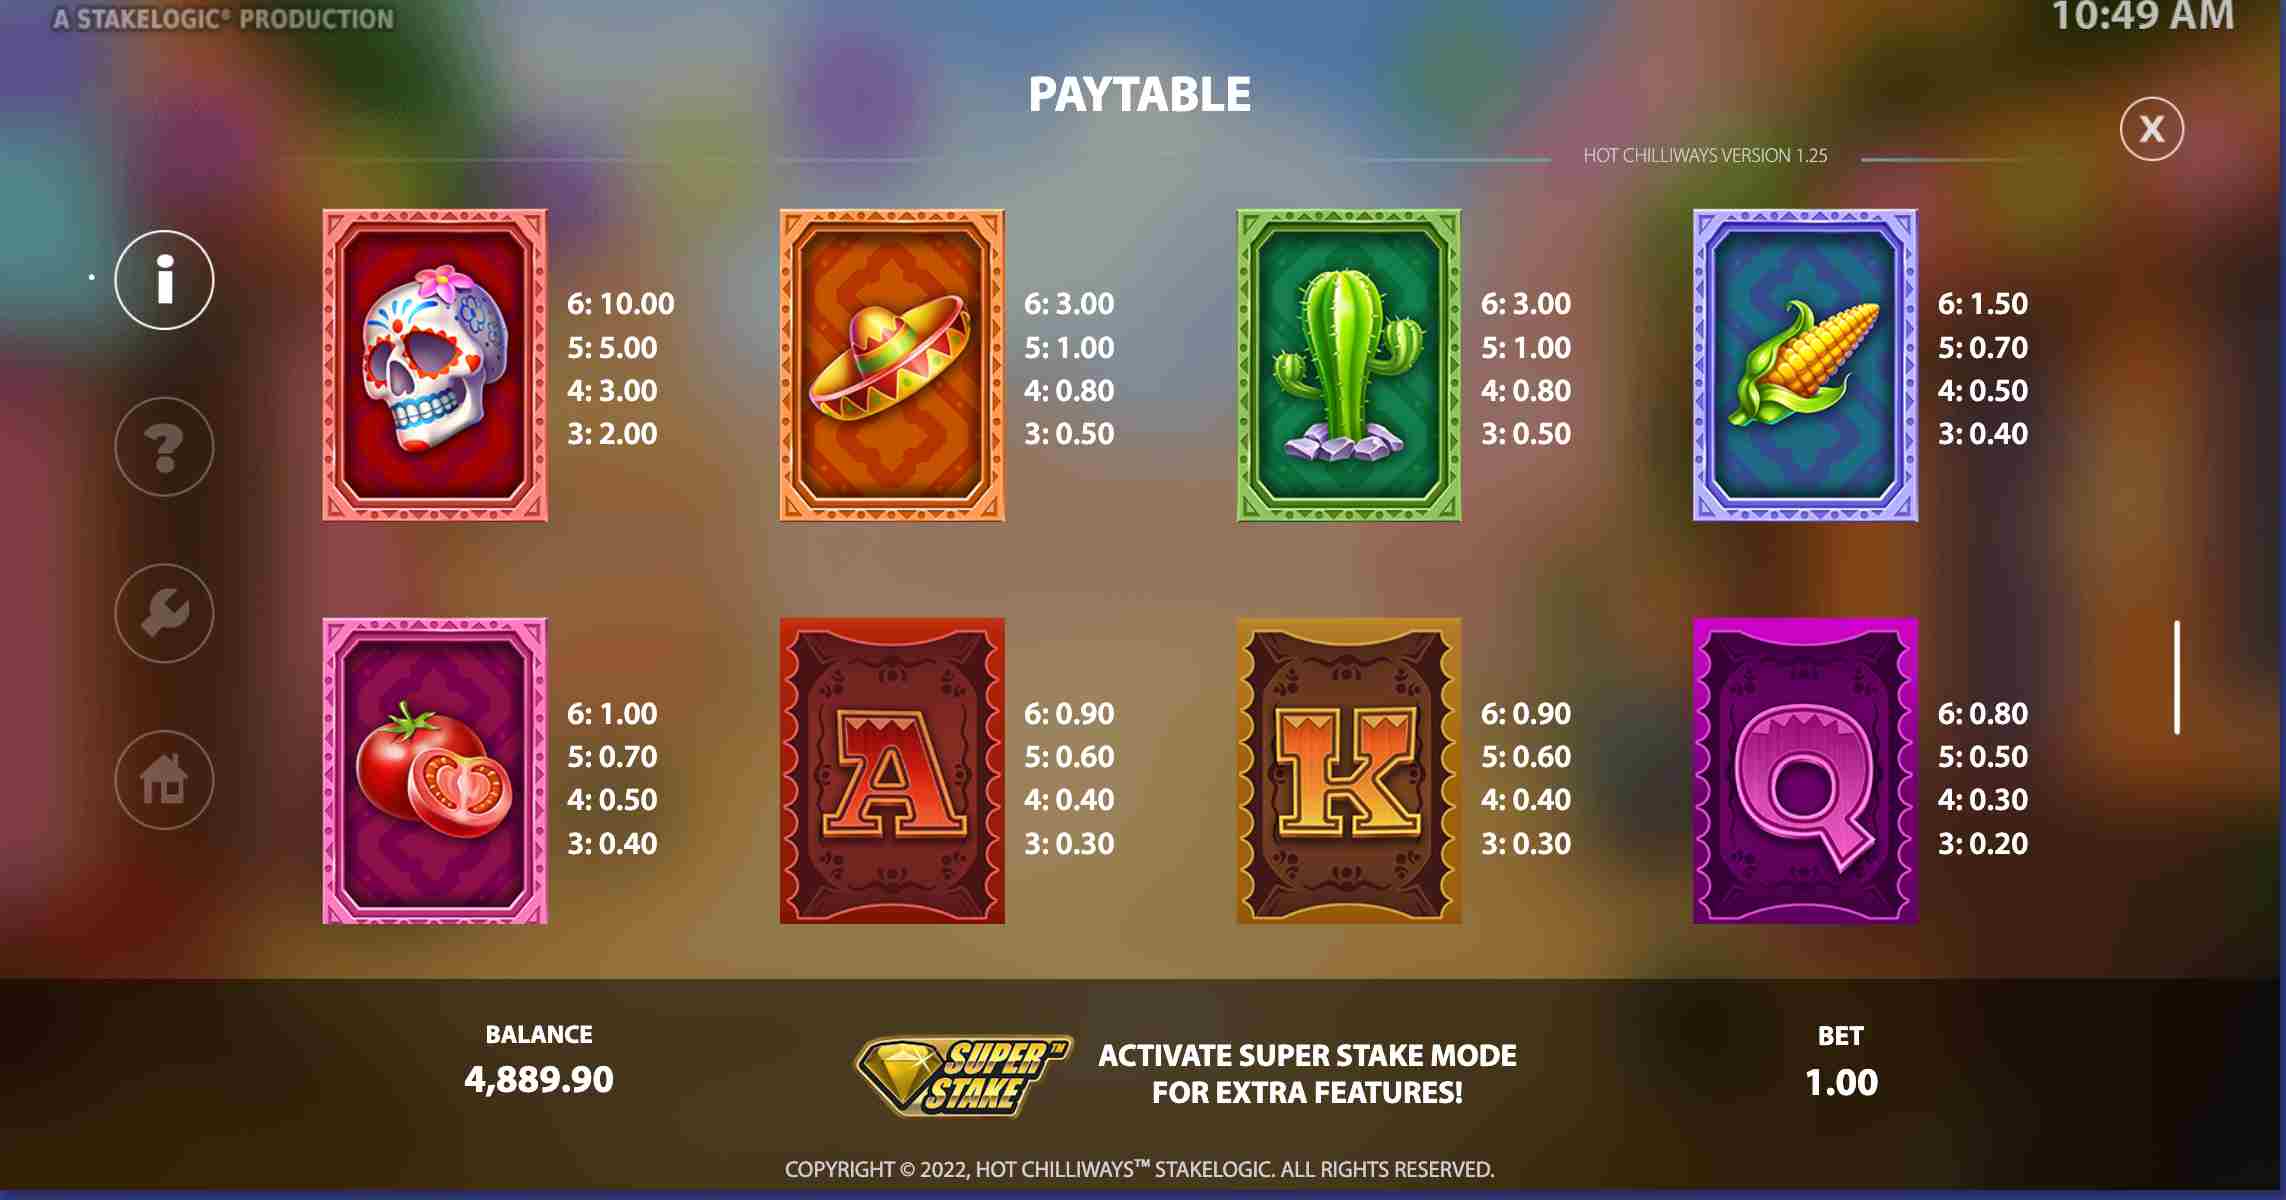 Hot Chilliways Paytable Screenshot